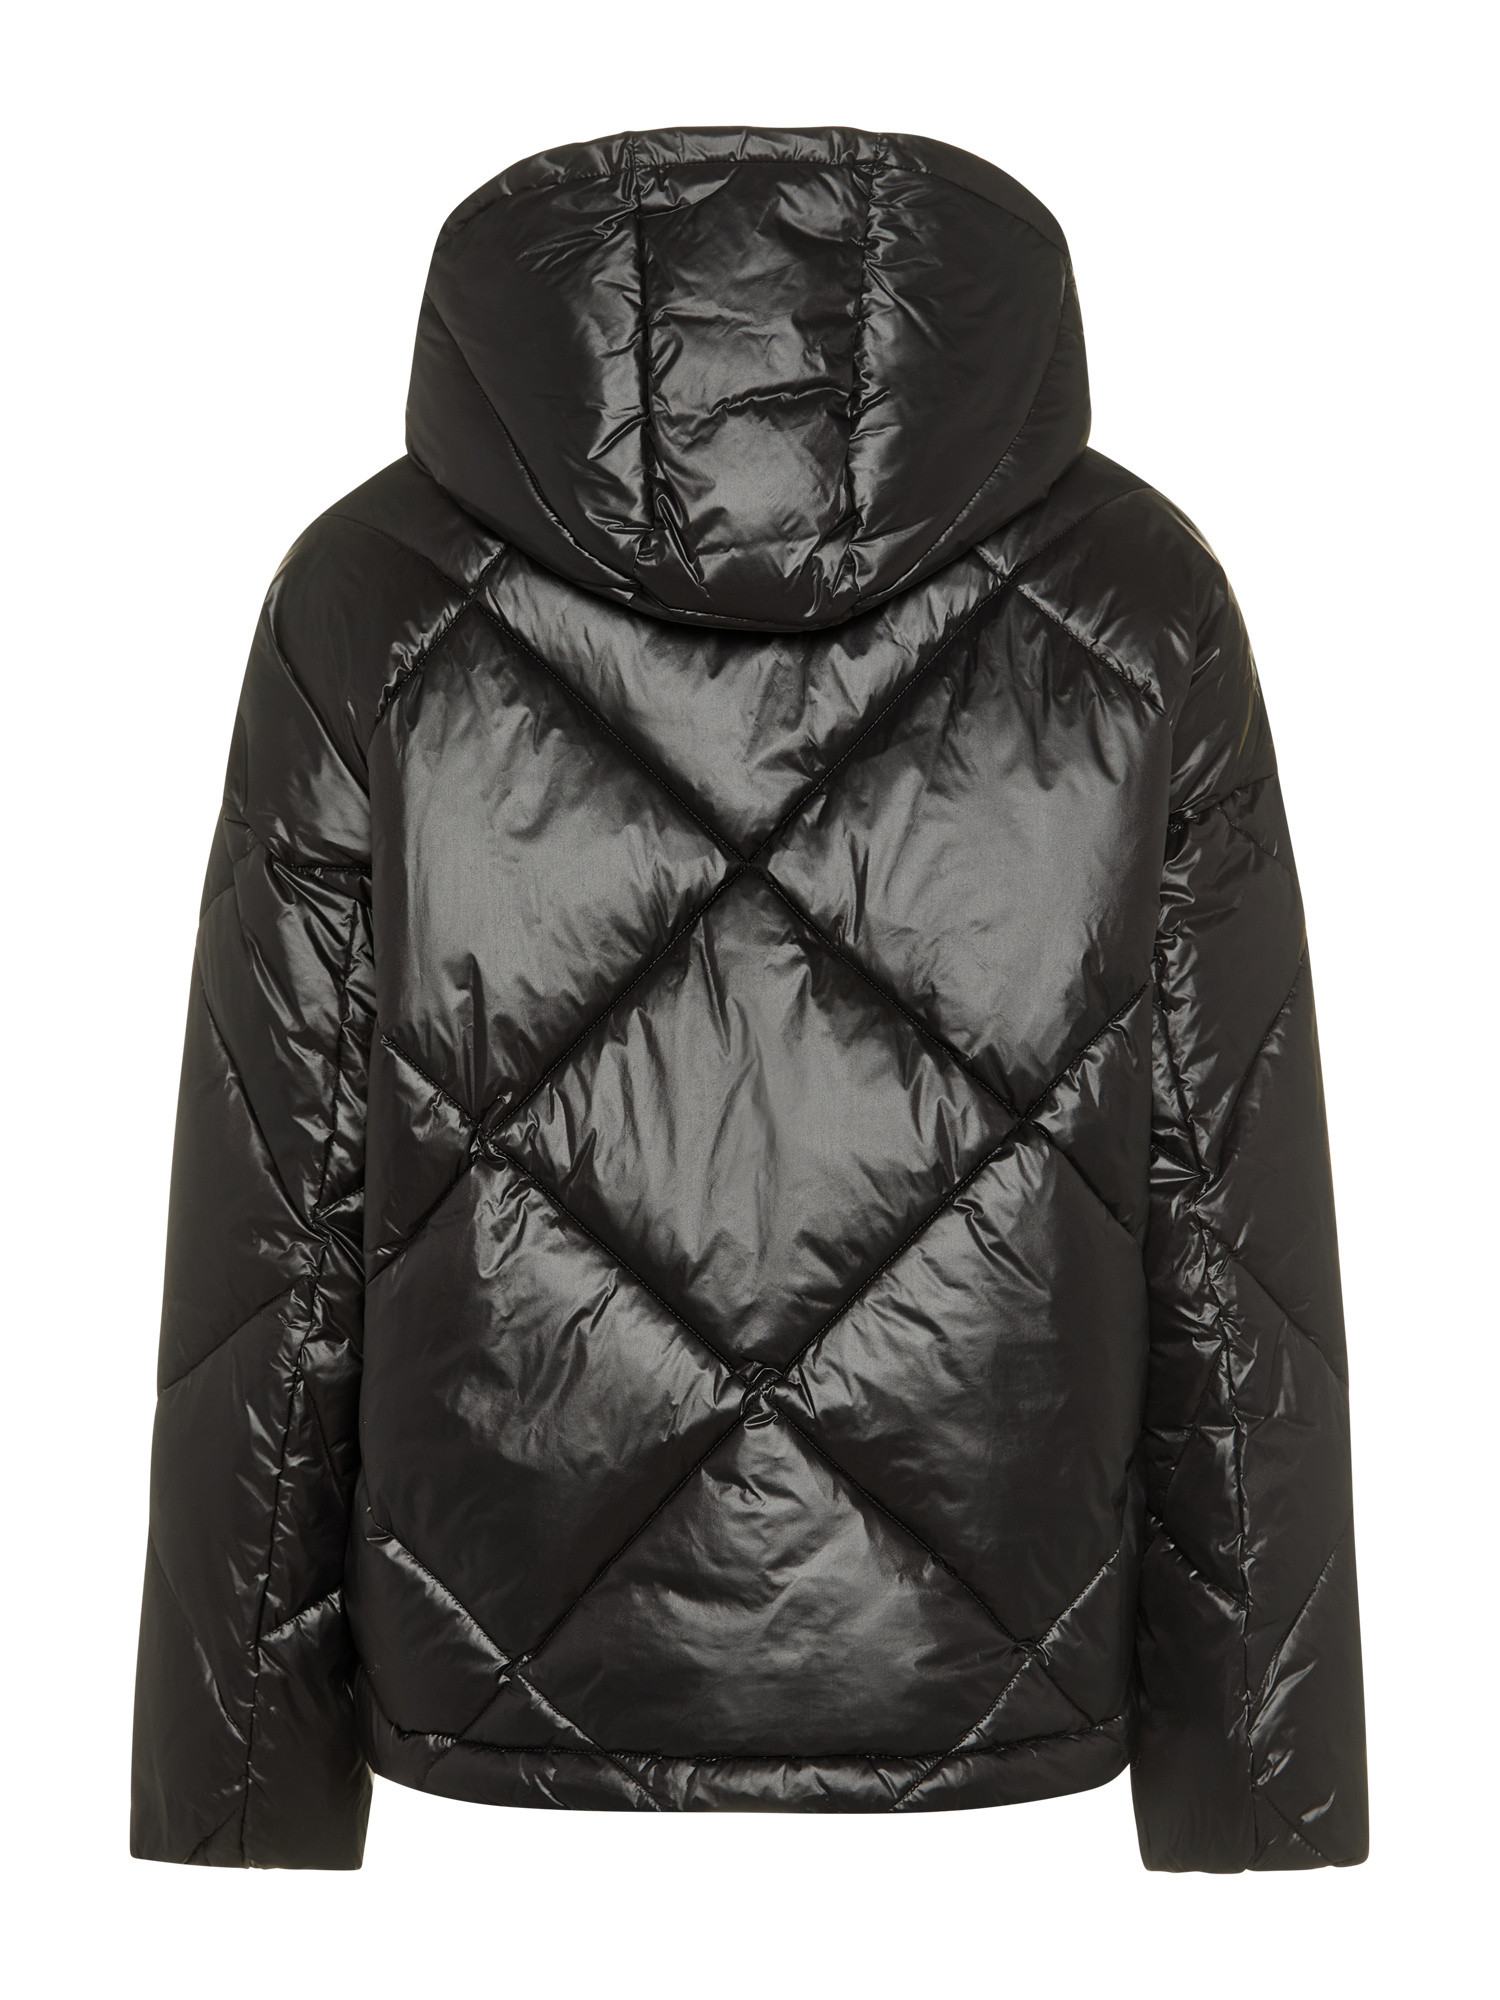 Oof Wear - Short oversized jacket with hood, Black, large image number 2